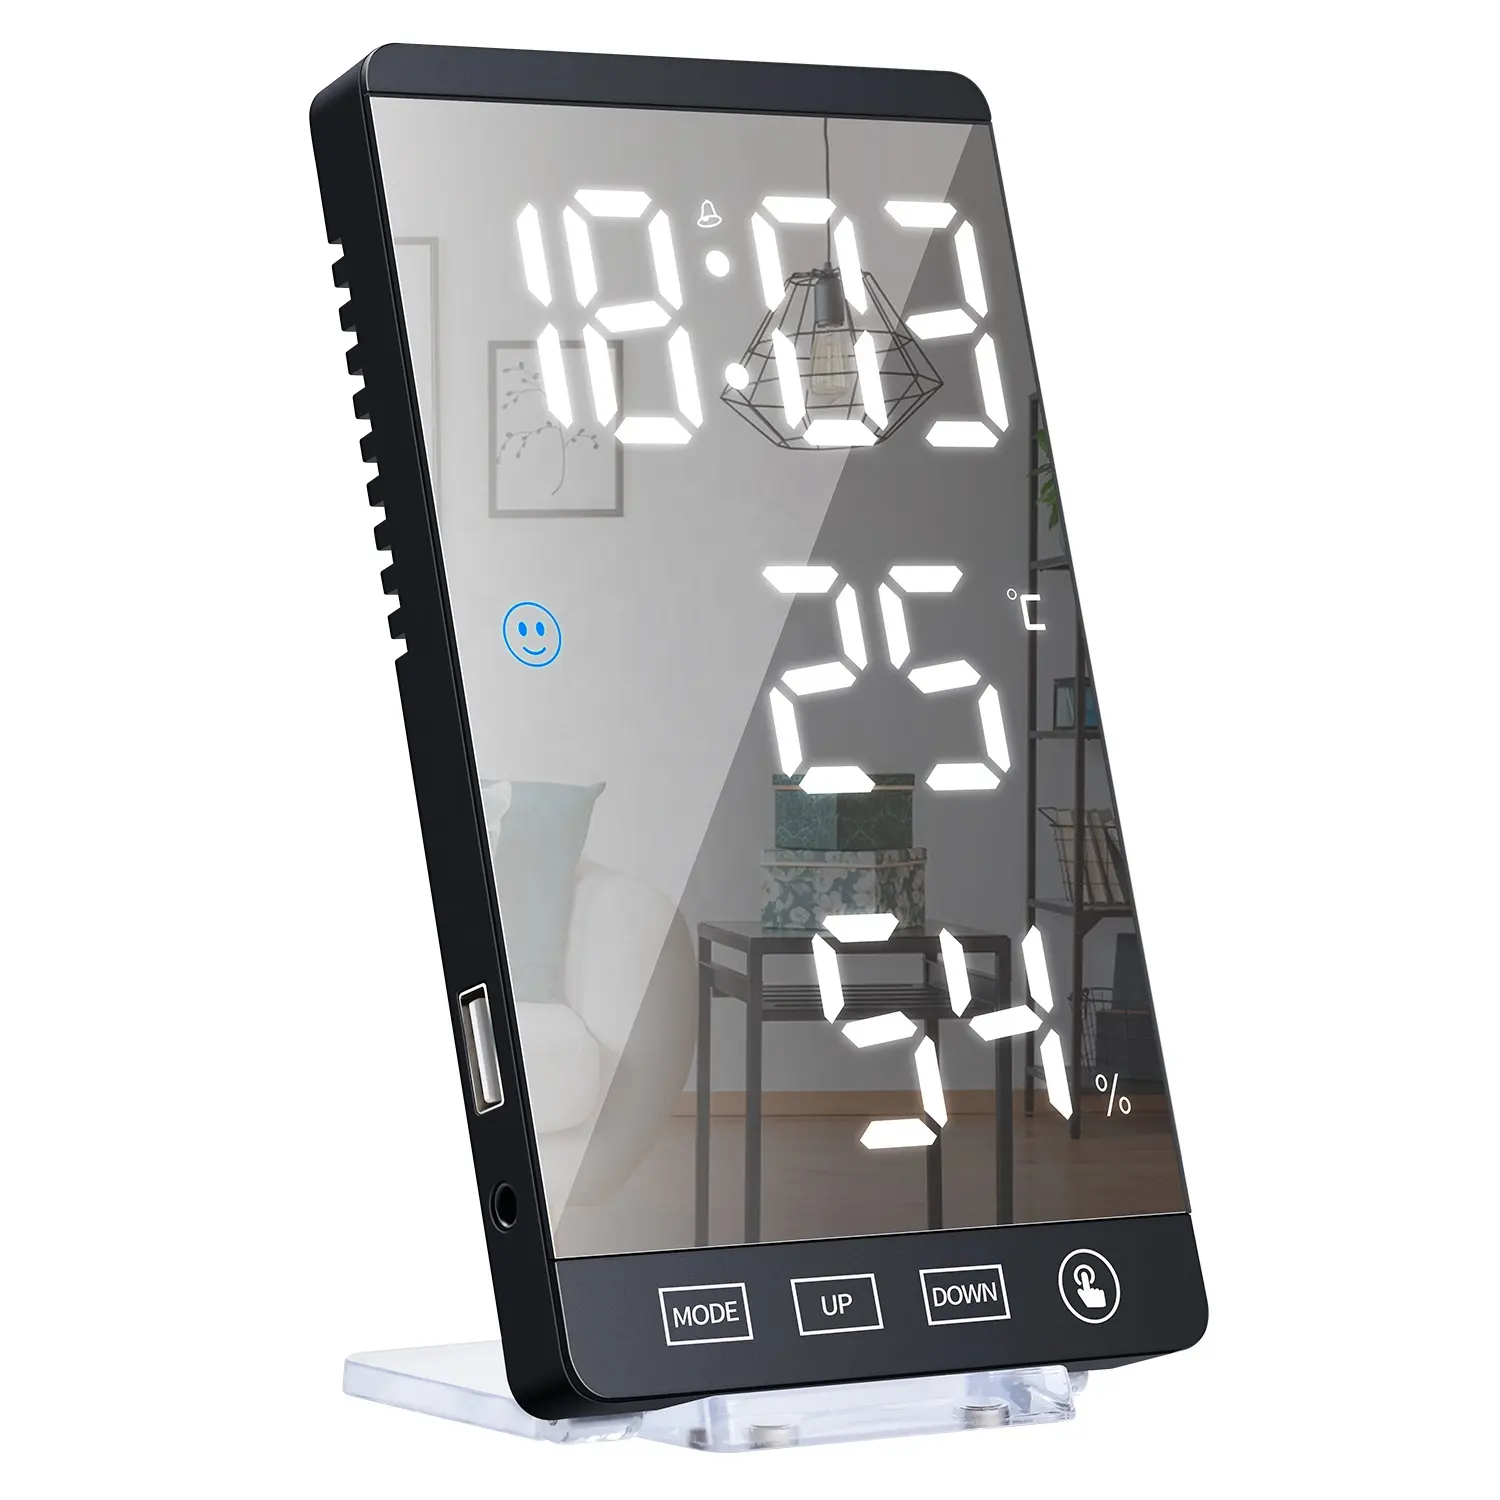 2020 NEW Digital Mirror LED Alarm Clock with USB Charging Port Brightness Sensor for Bedroom Wall Kitchen Hotel Table Desk